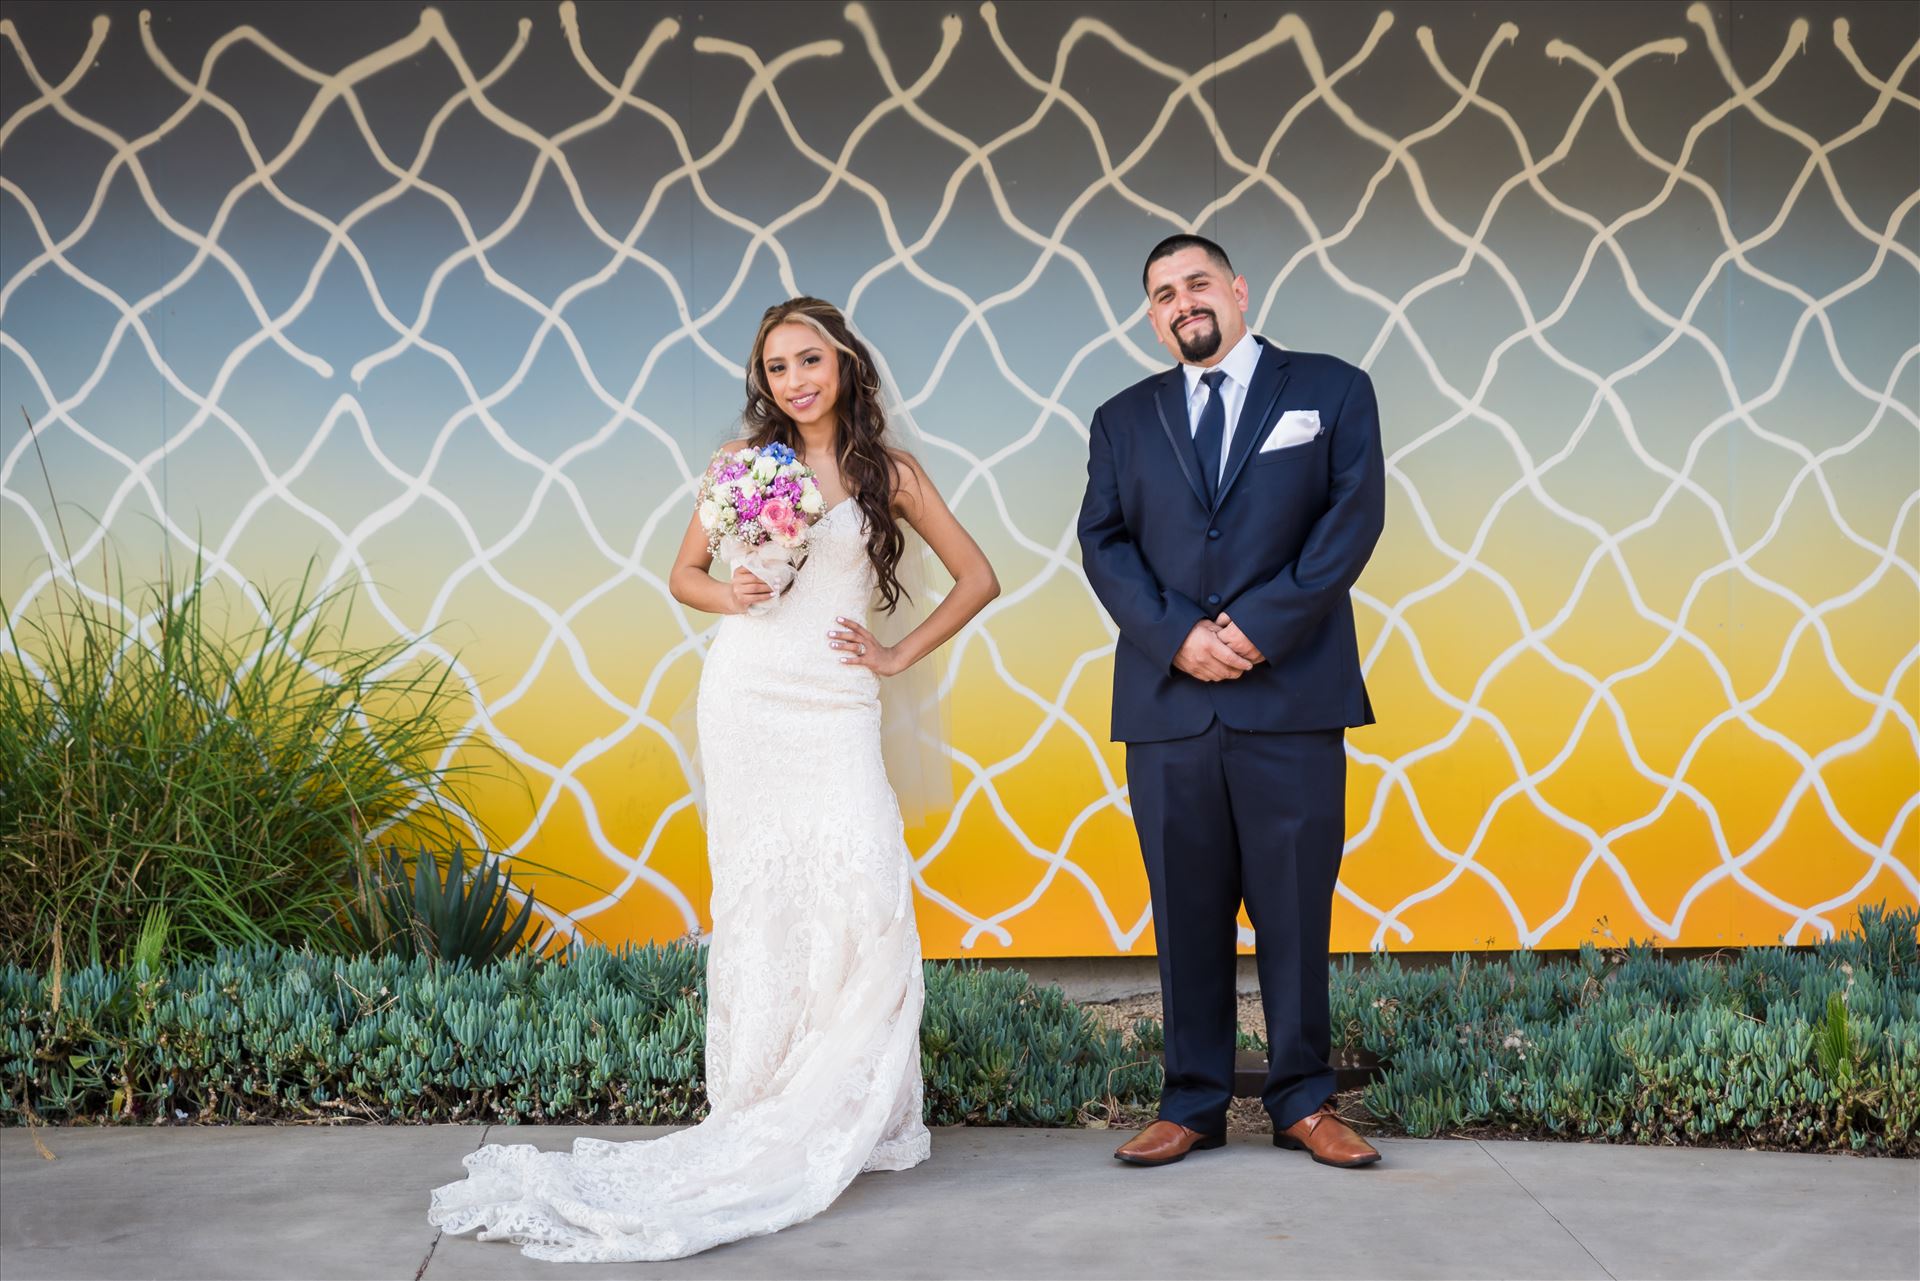 Ana and Juan 65 - Wedding photography at the Kimpton Goodland Hotel in Santa Barbara California by Mirror's Edge Photography.  Bride and Groom by Retro Art Wall by Sarah Williams